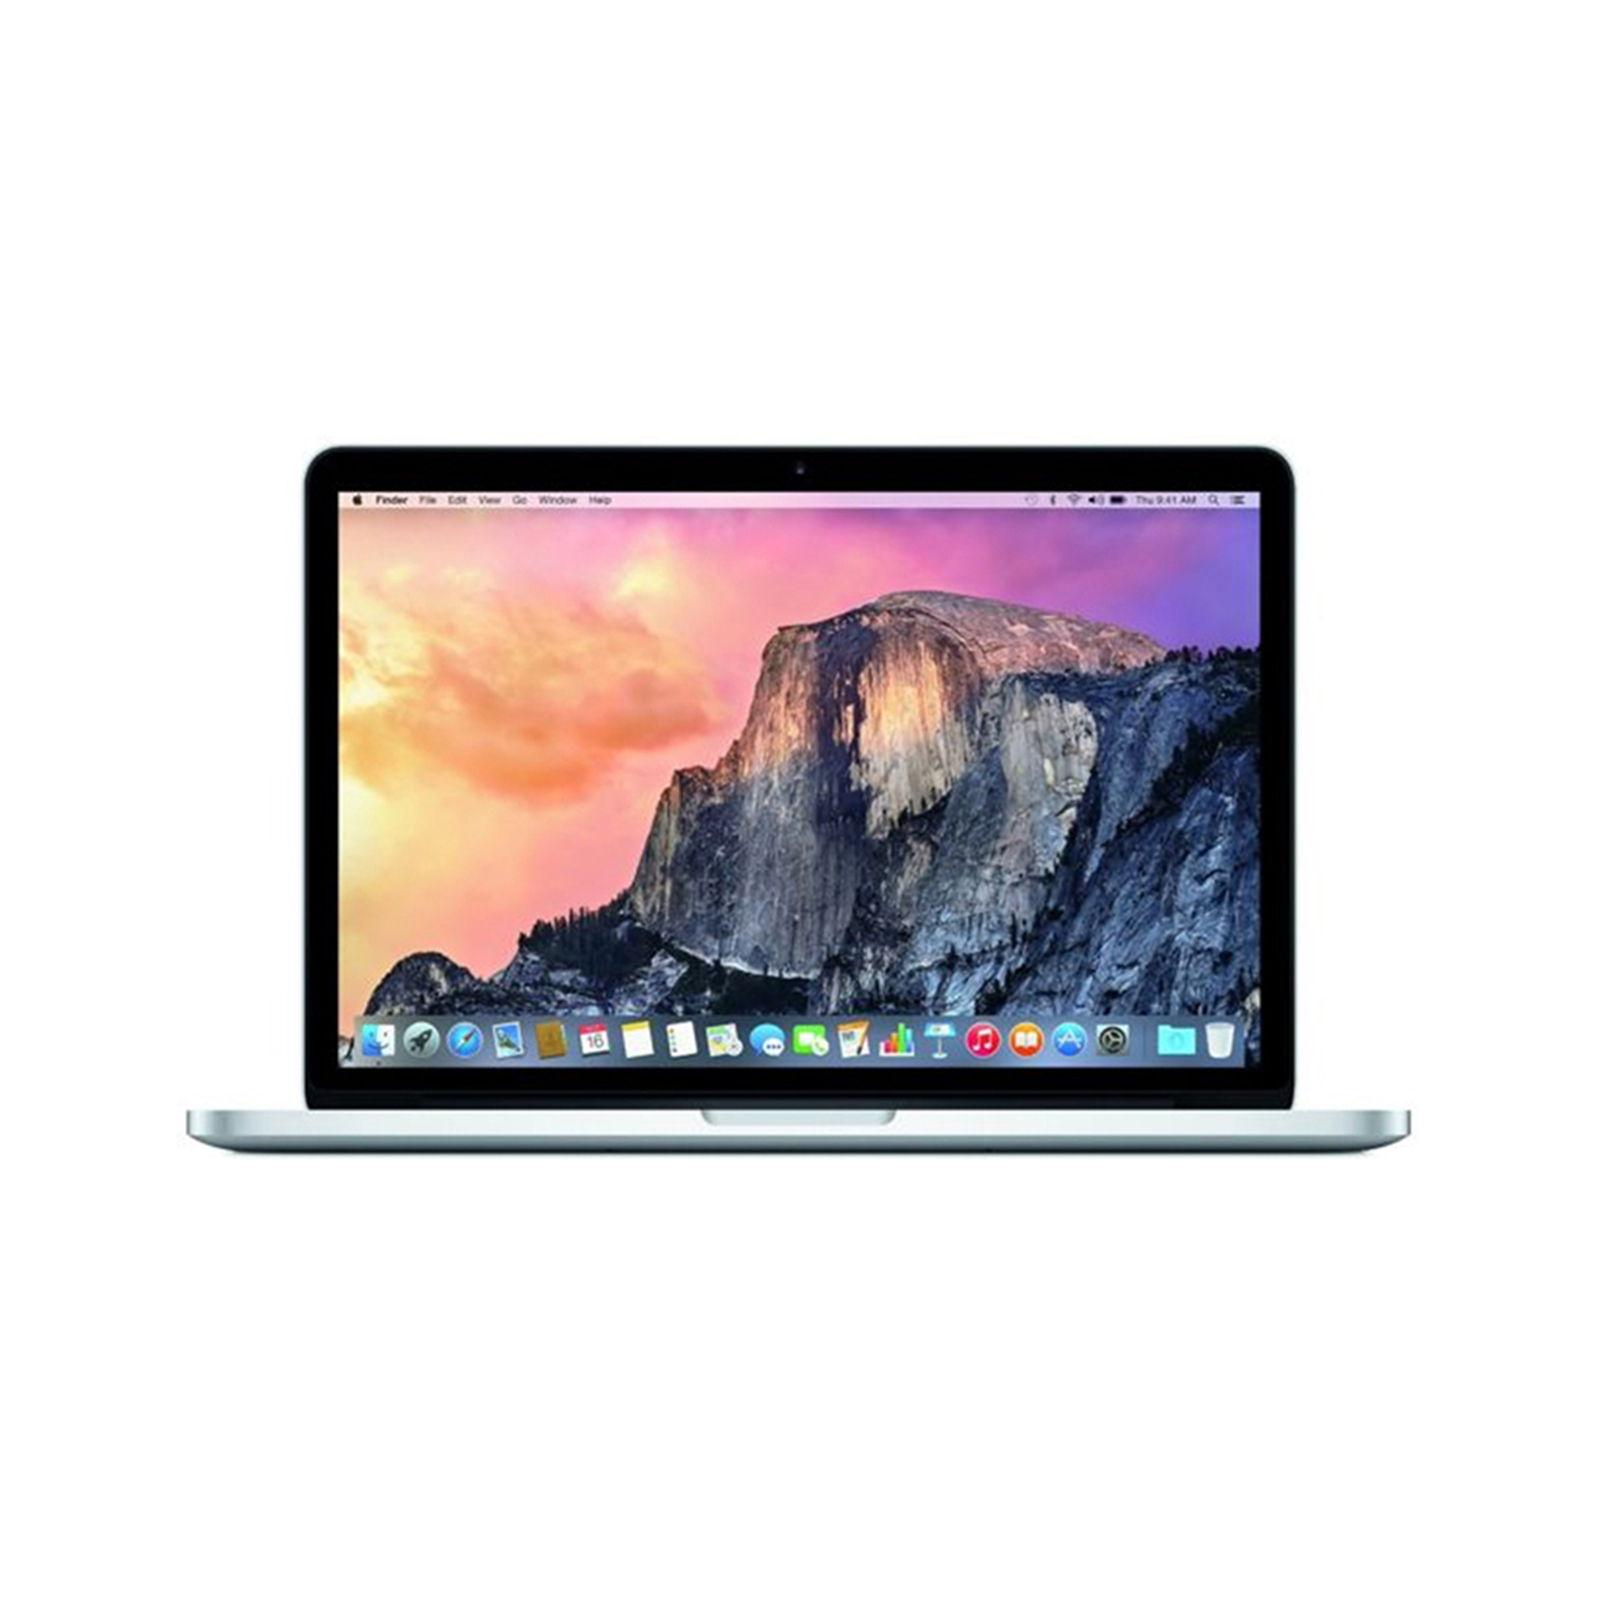 MacBook Pro (15-inch, Mid 2015) Core i7 2.5 GHz 16GB RAM 512GB SSD